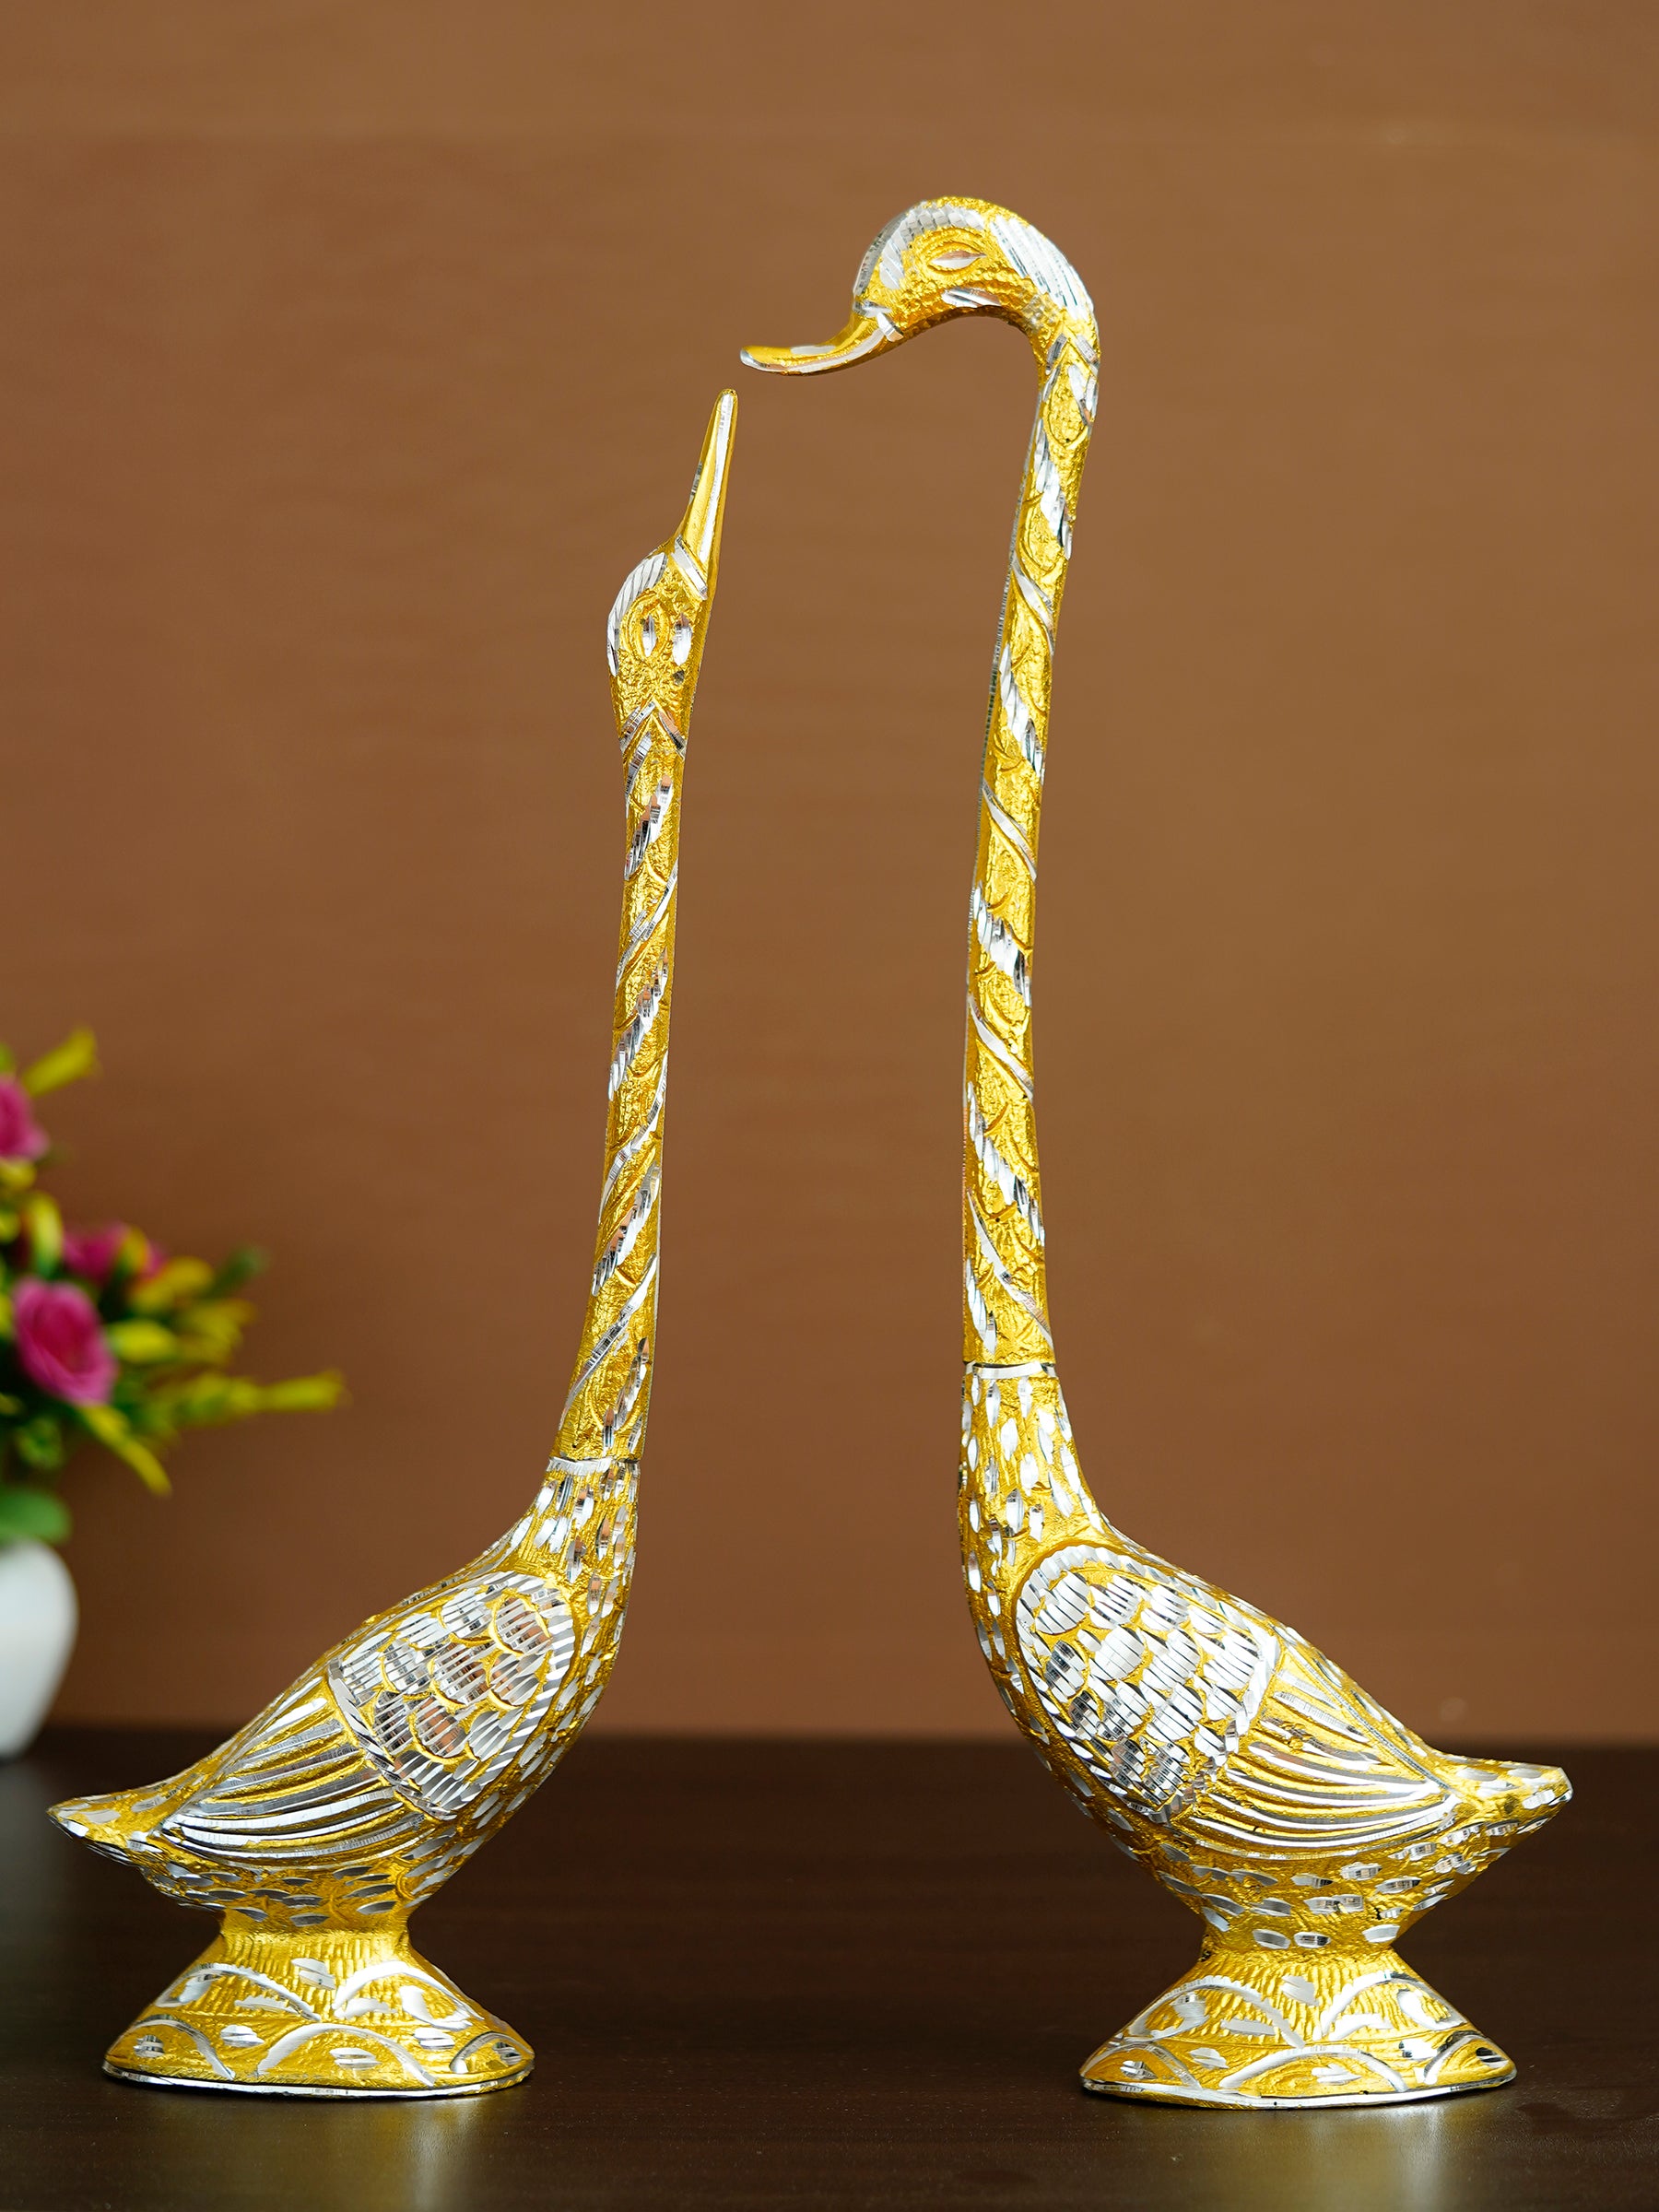 Golden Metal Kissing Swan Couple Handcrafted Decorative showpiece Love Bird Figurines